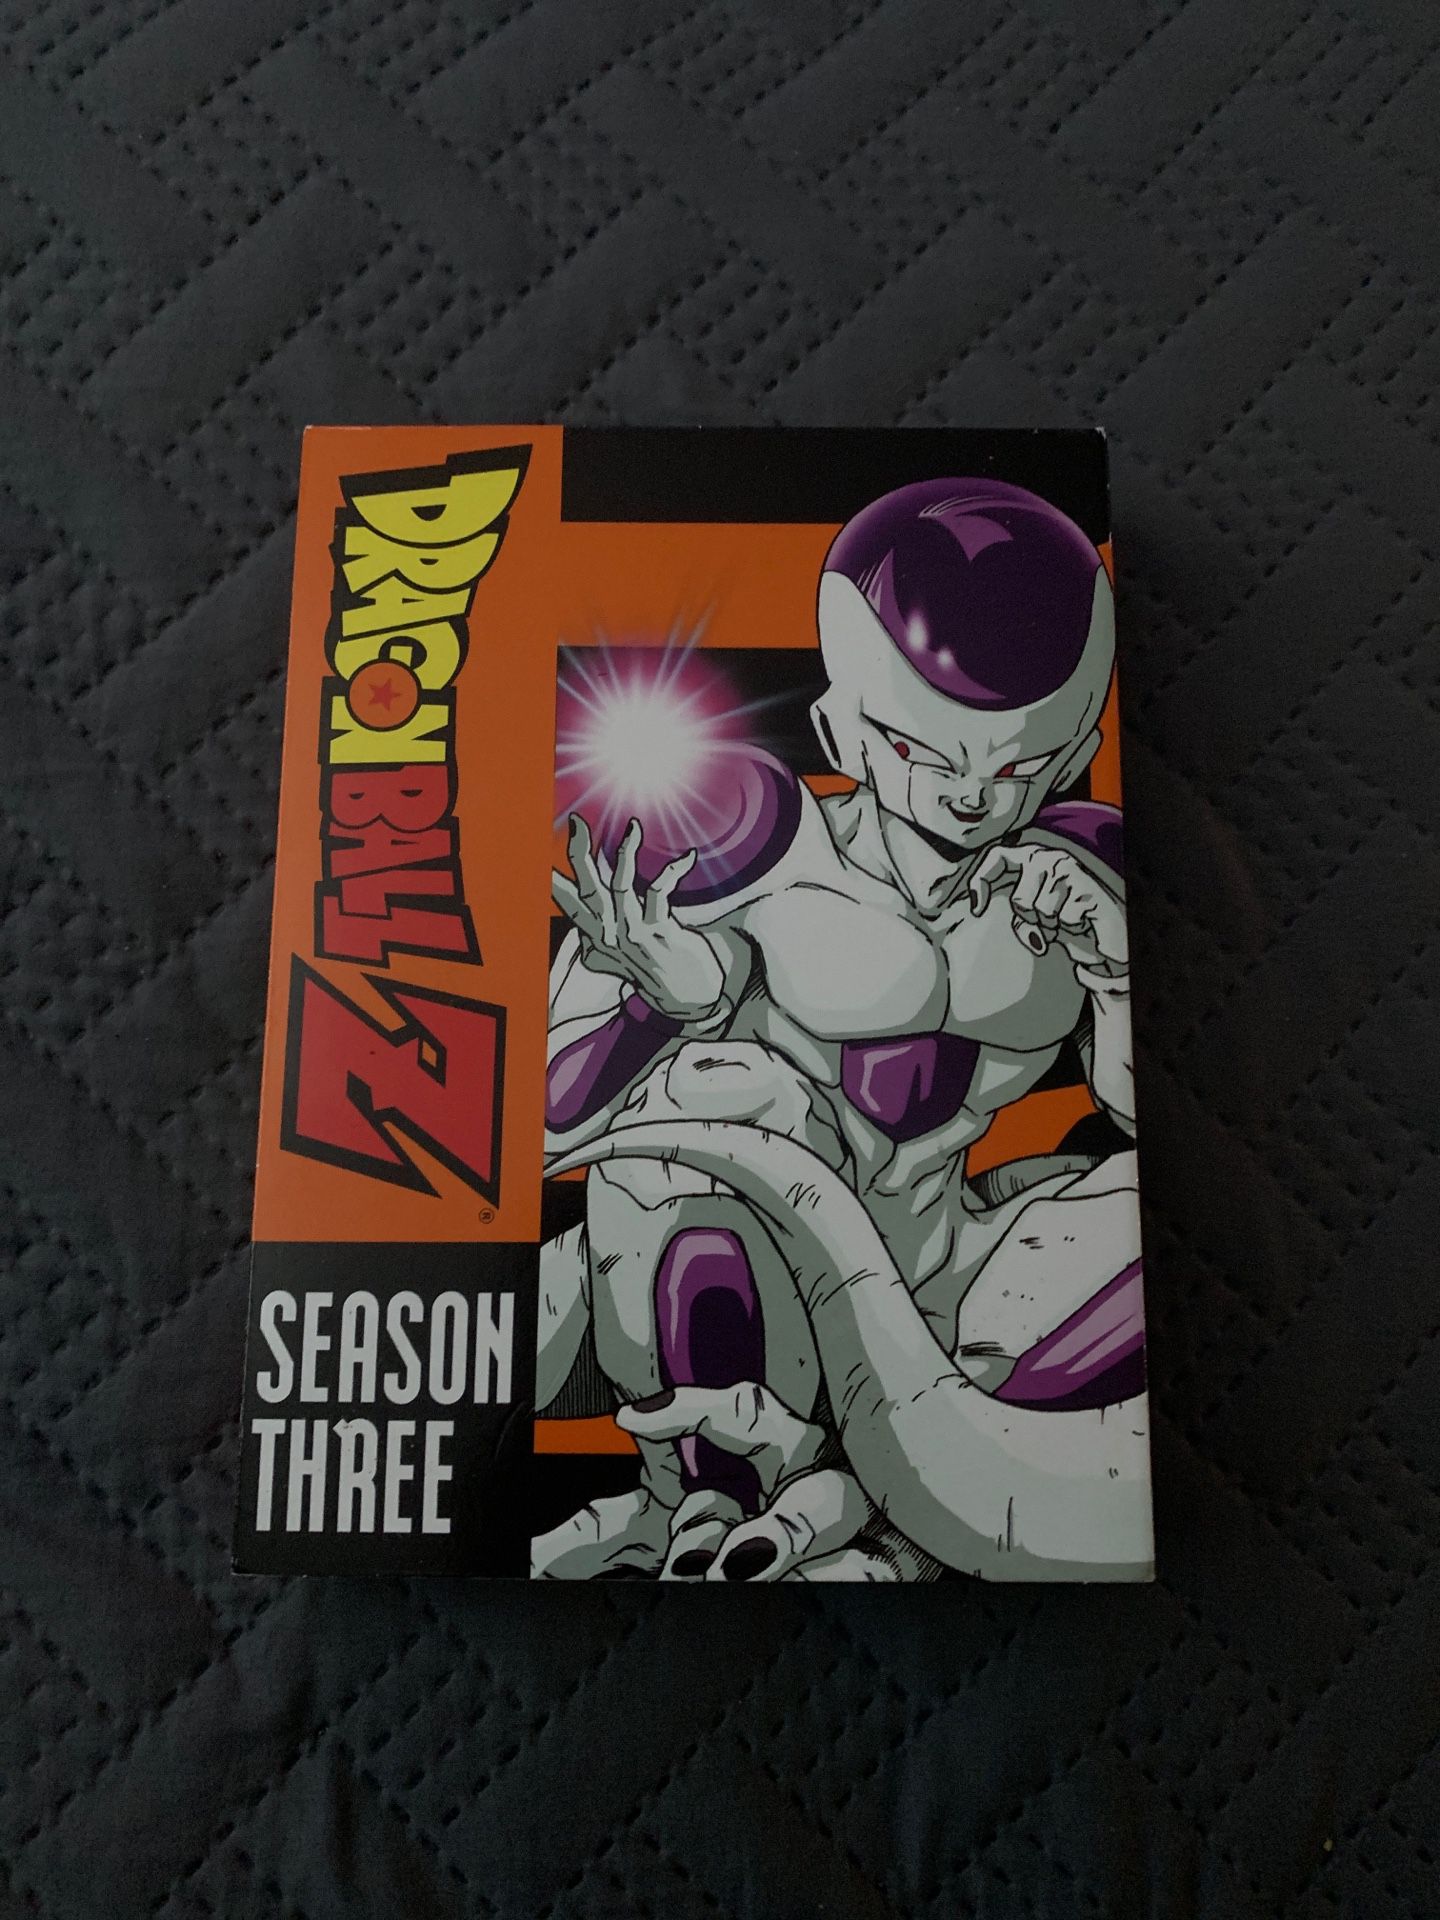 Complete DragonBall z season 3, infamous Frieza saga collection.